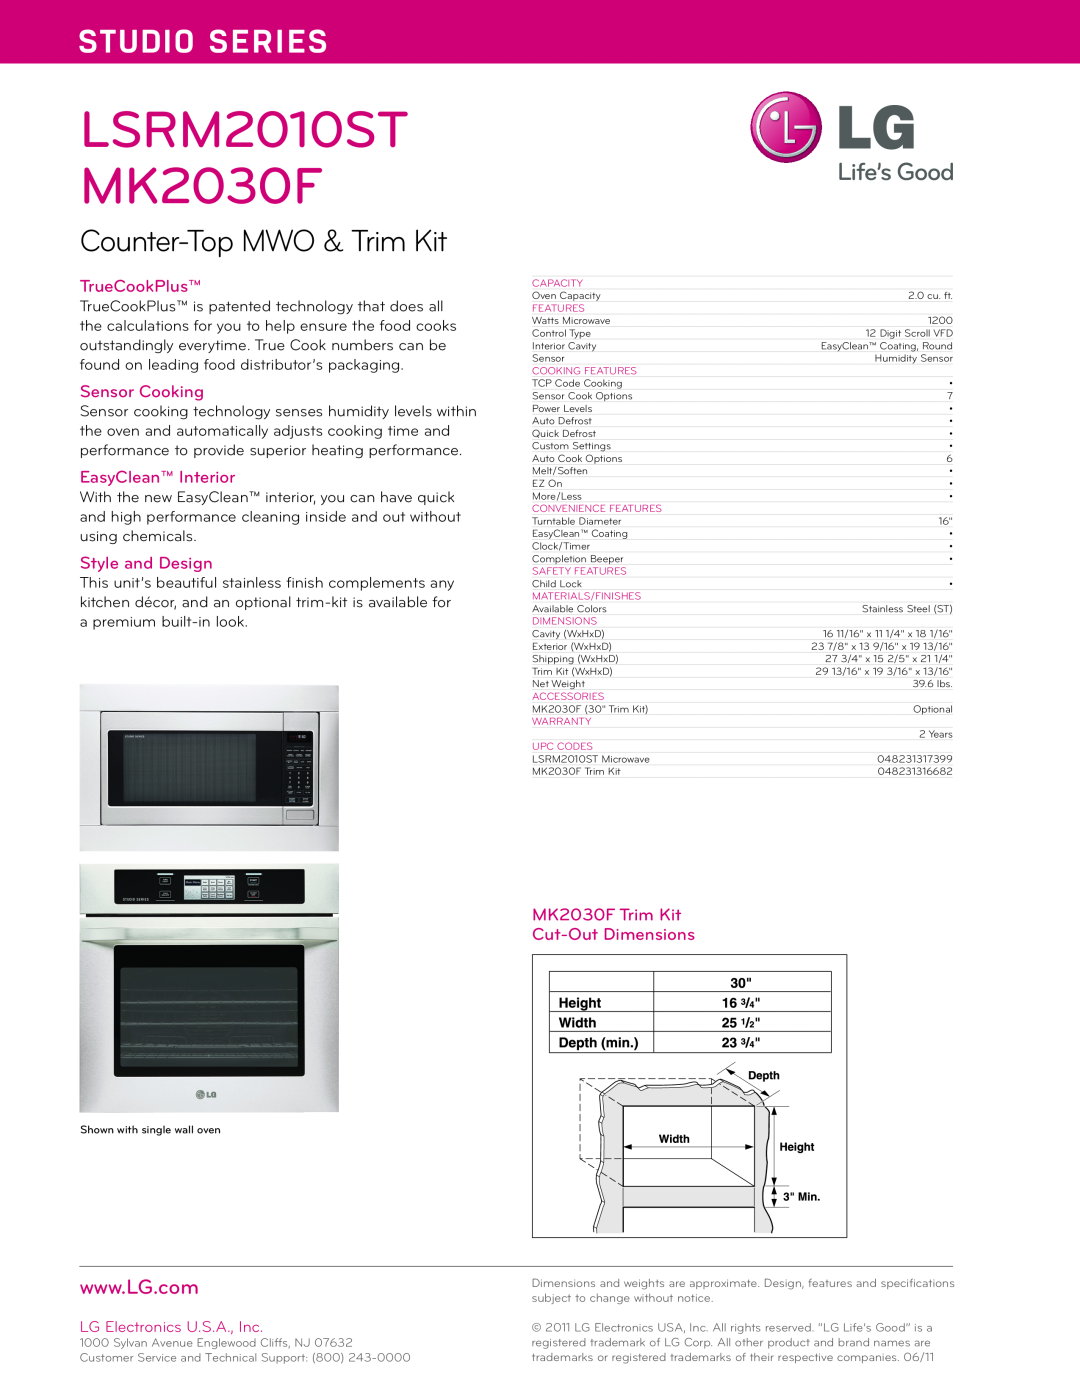 LG Electronics manual TrueCookPlus, Sensor Cooking, EasyClean Interior, Style and Design, LSRM2010ST MK2030F 